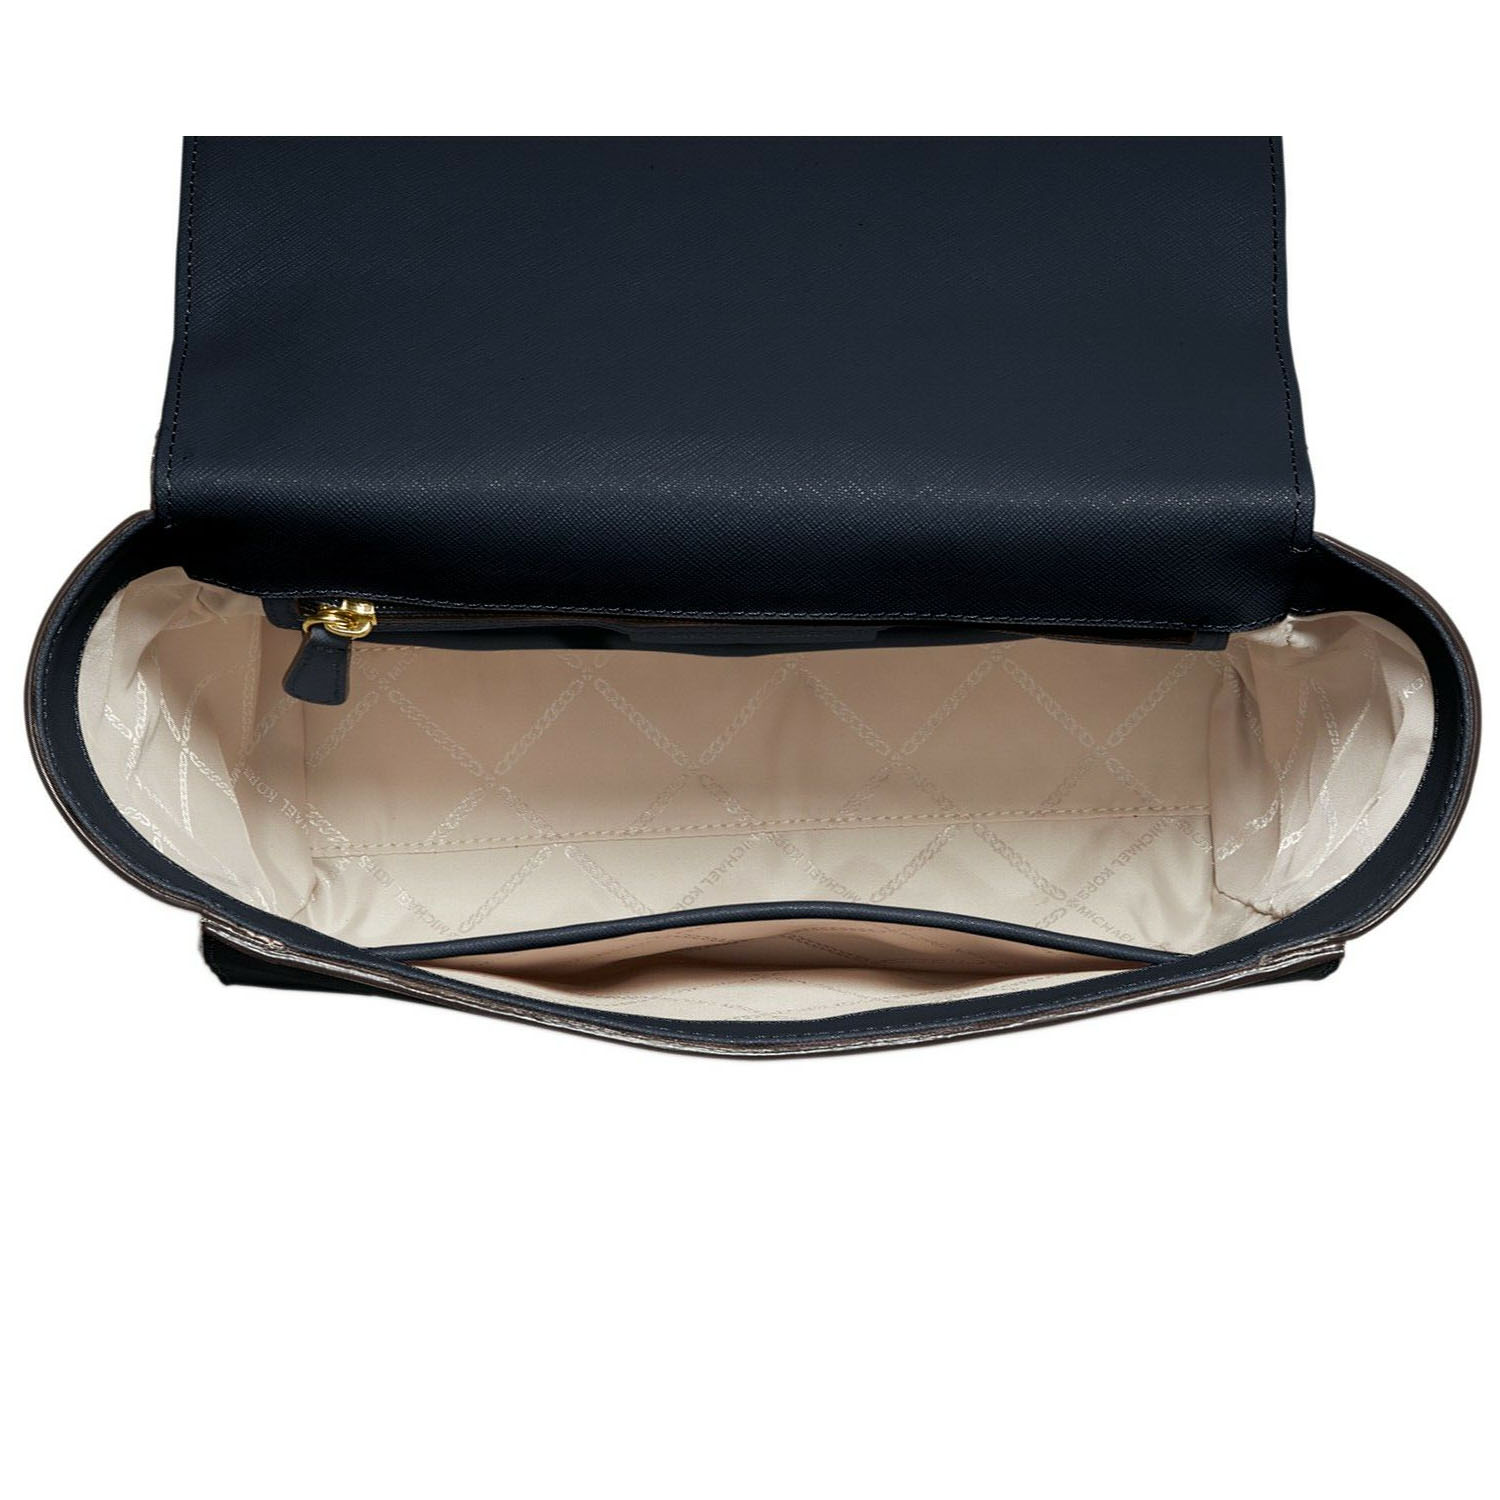 Michael Kors Crossbody Bag With Gift Bag Brandi Medium Top Handle Leather Satchel Admiral Navy Dark Blue # 38H8GI3S2L